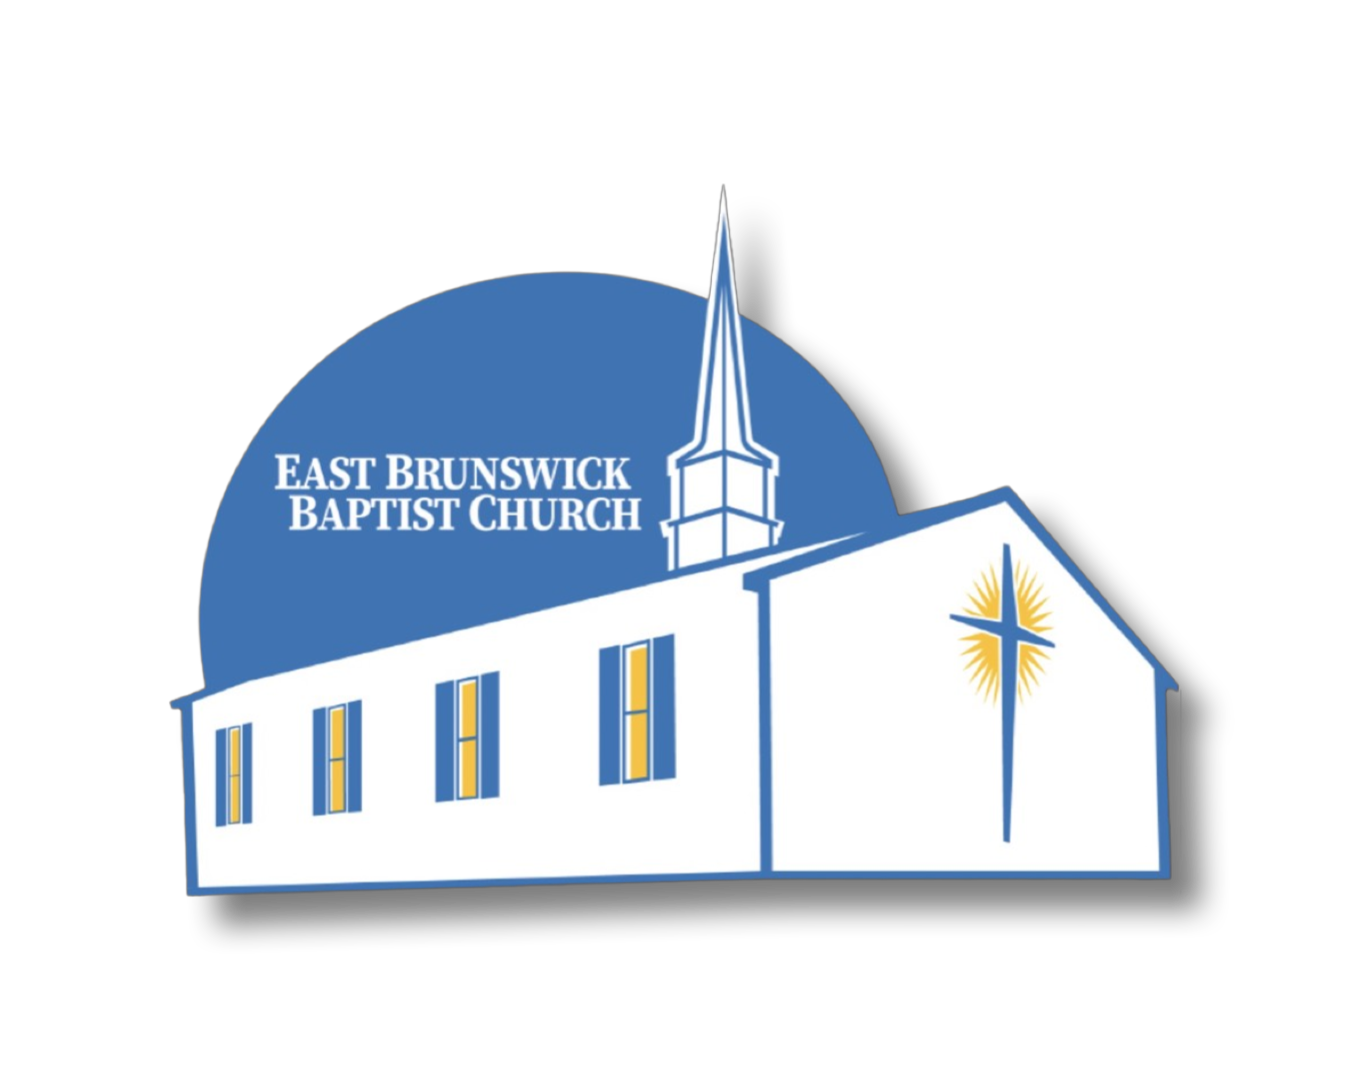 East Brunswick Baptist Church